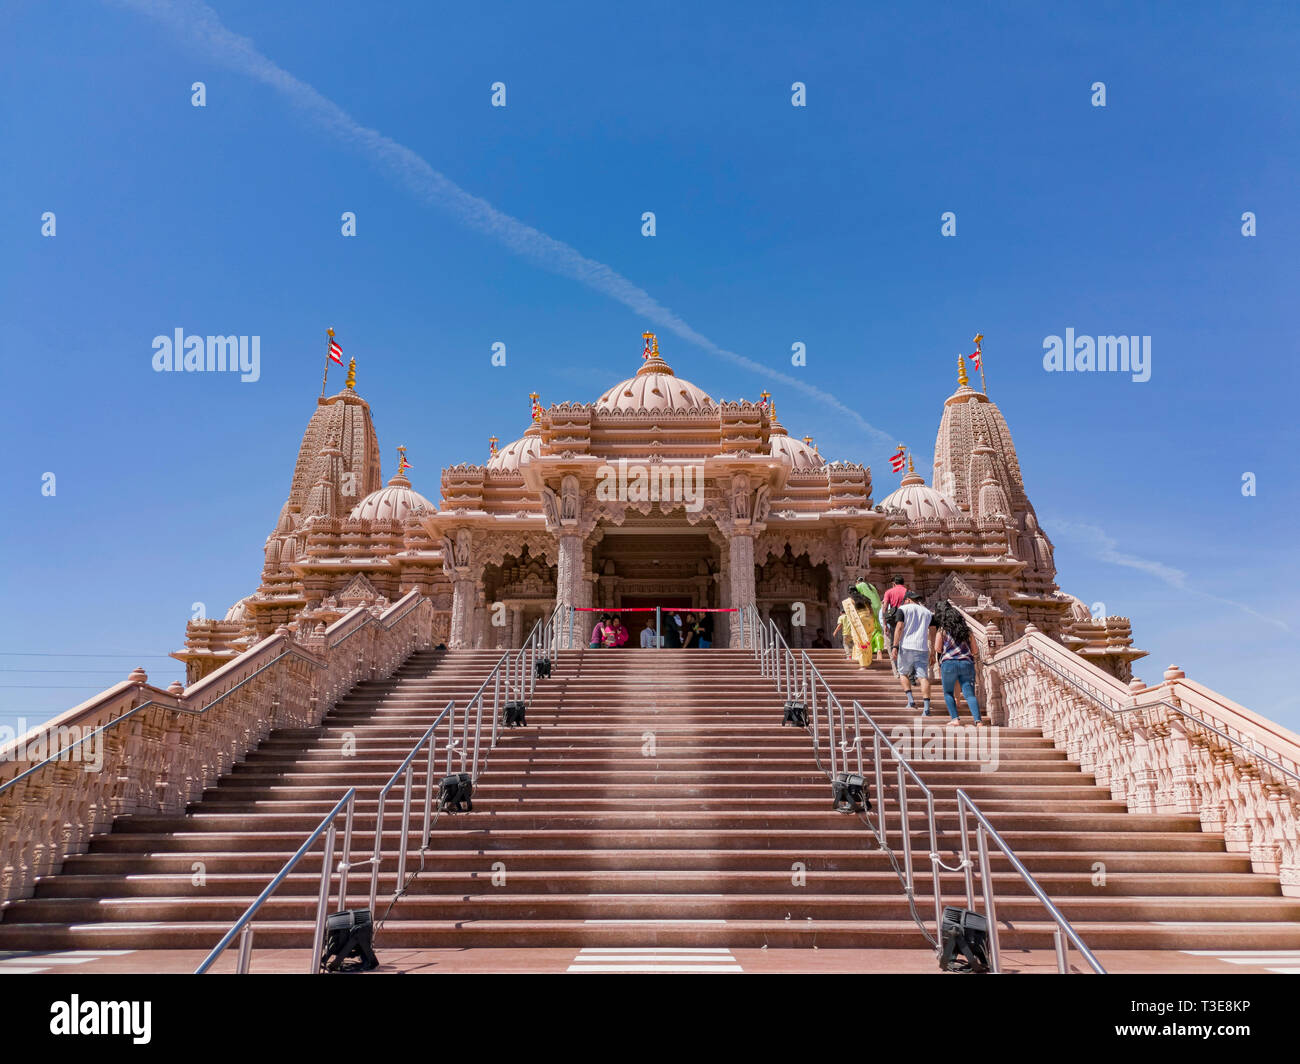 Le Chino Hills, MAR 31 : Vue extérieure de la célèbre temple BAPS Shri Swaminarayan Mandir le Mar 31, 2019 à Chino Hills, Los Angeles County, Californie Banque D'Images